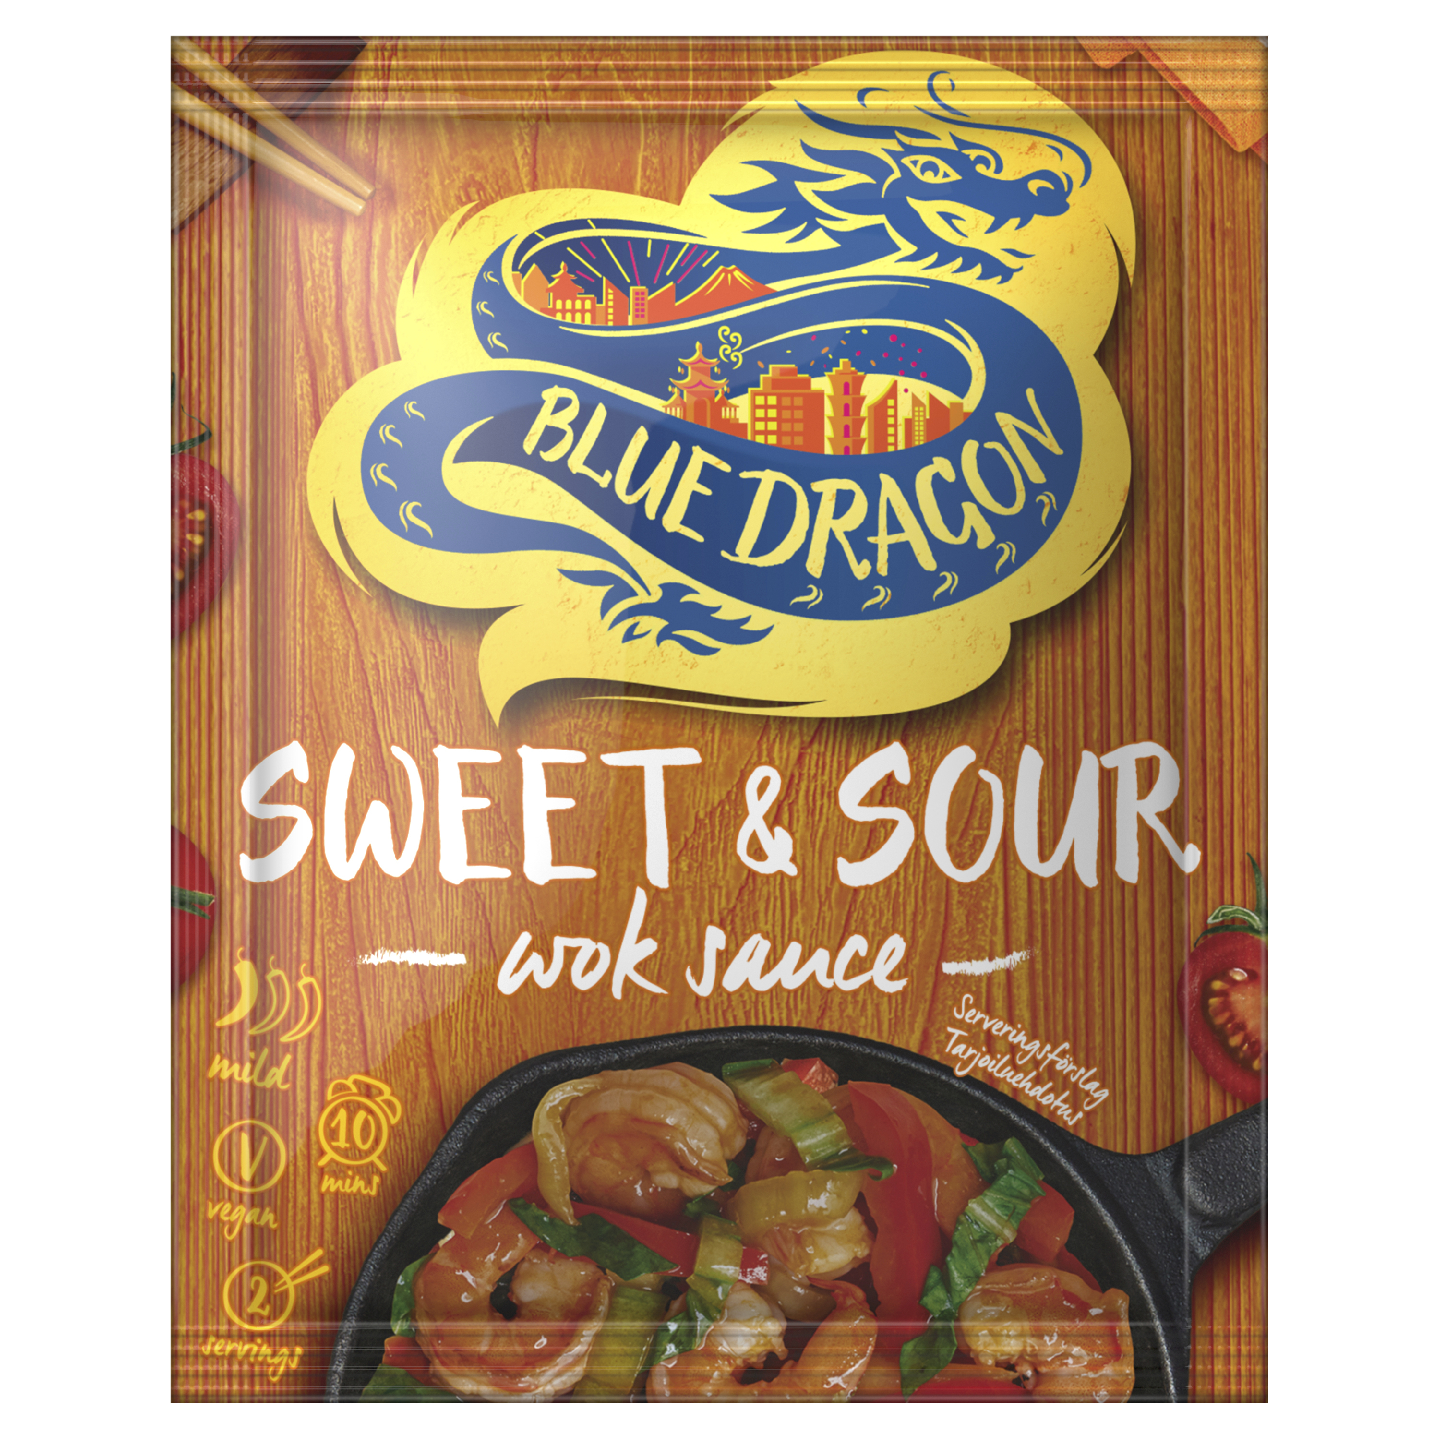 Blue Dragon Sweet-sour wok-kastike 120g